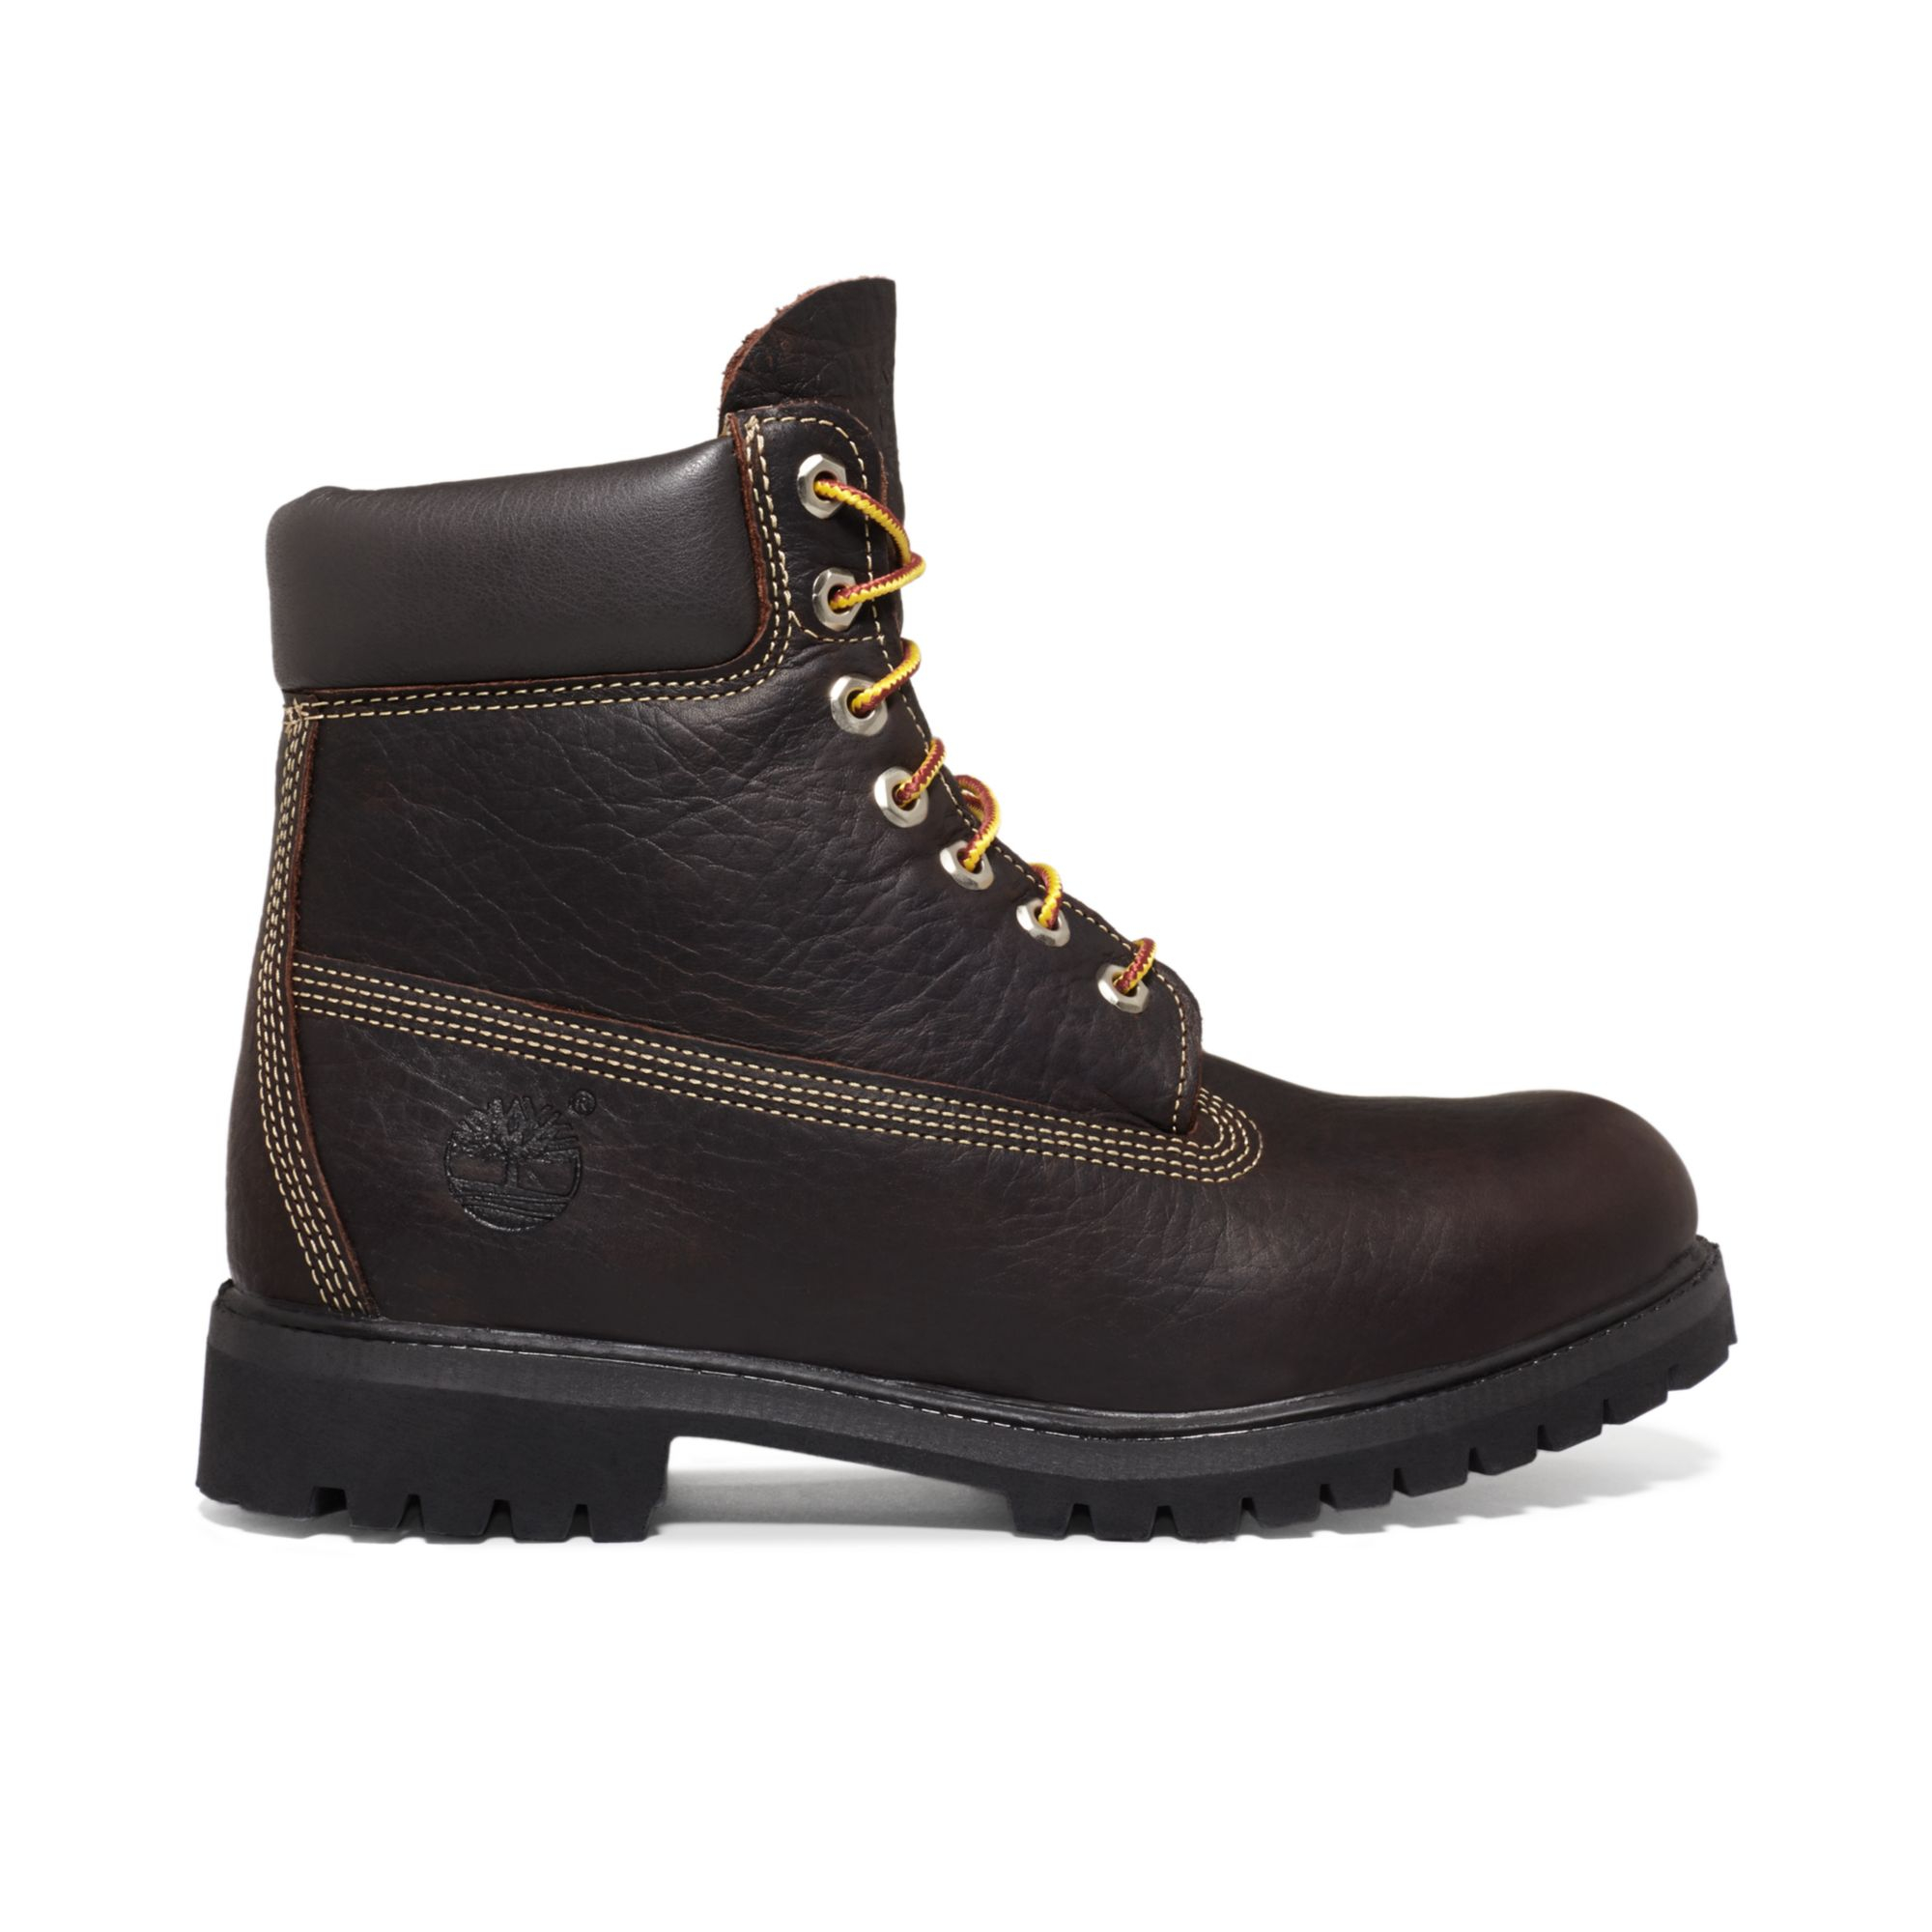 Lyst - Timberland 6 Premium Waterproof Boots in Brown for Men